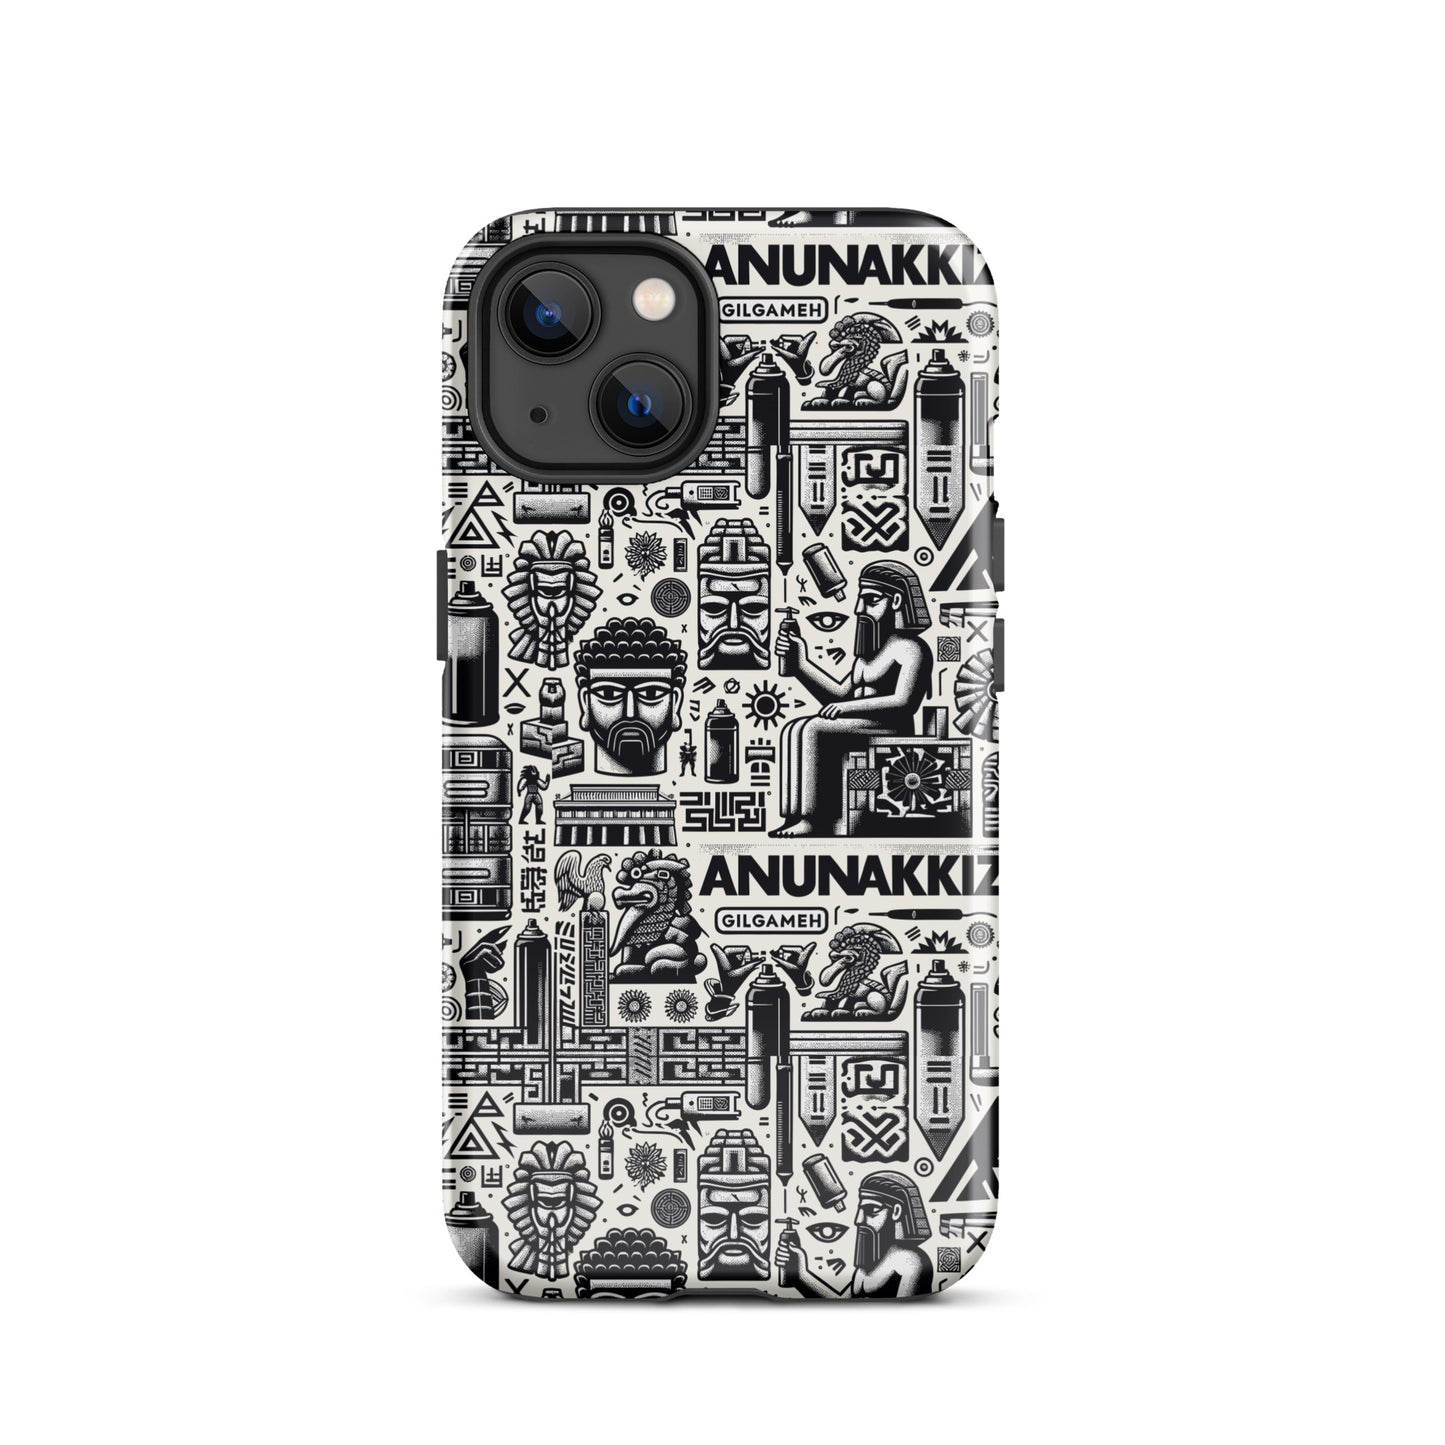 Anunakiz Ancient Graffiti Pattern Tough Case for iPhone®